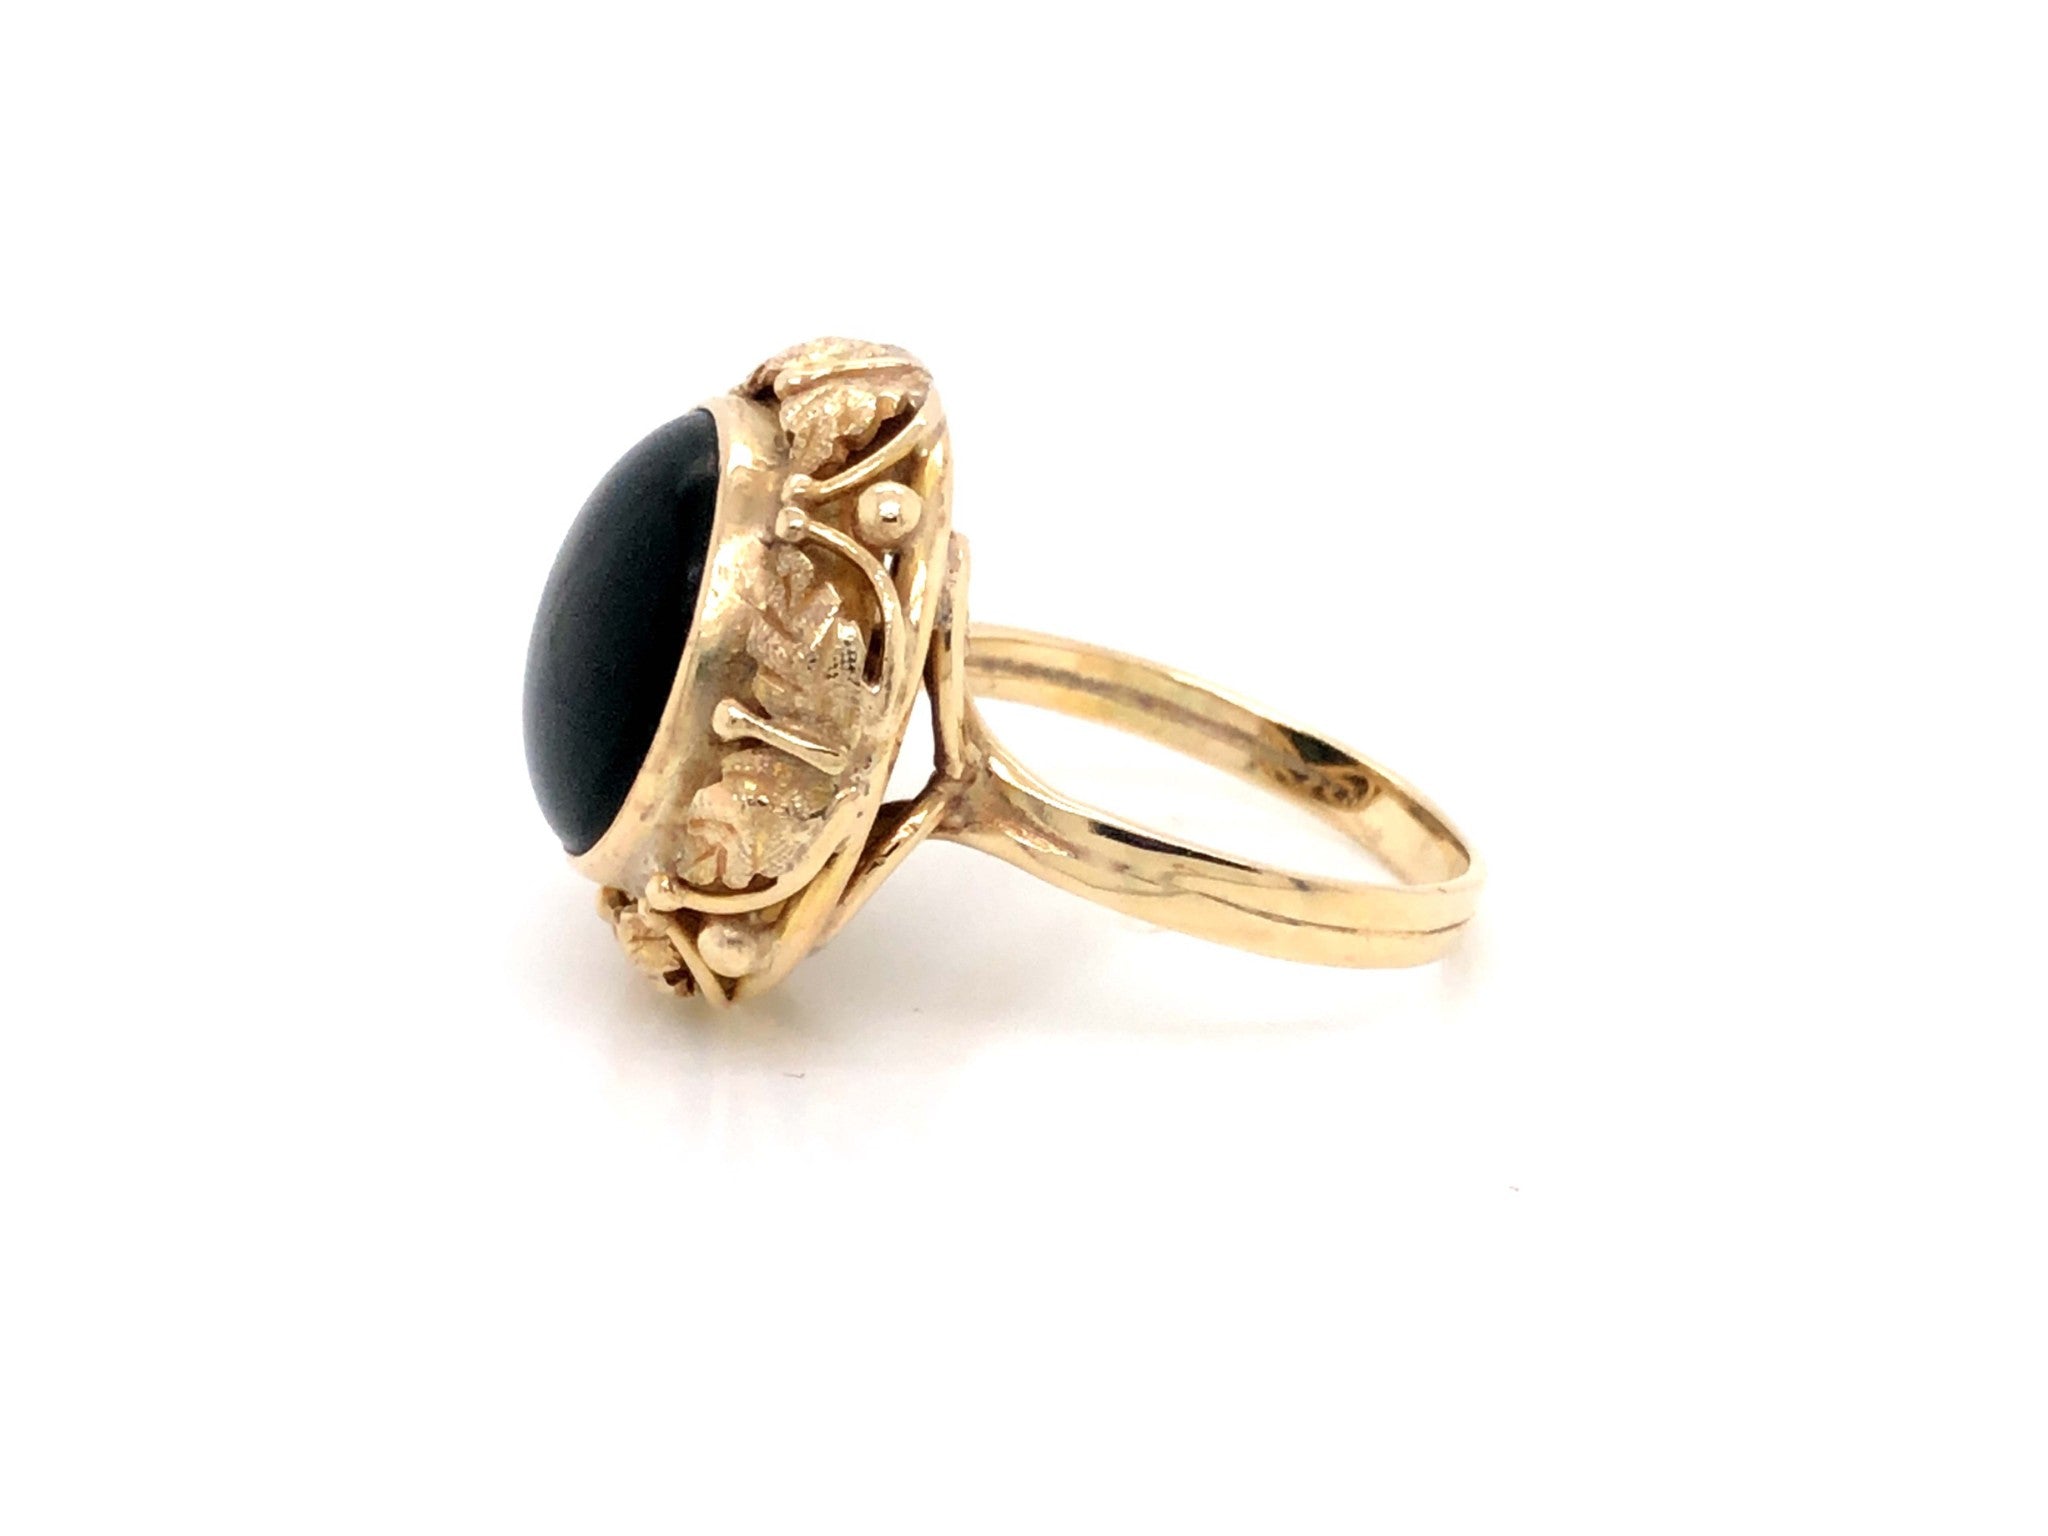 Vintage Round Black Jade Ring with Leaf Design- 14k Yellow Gold